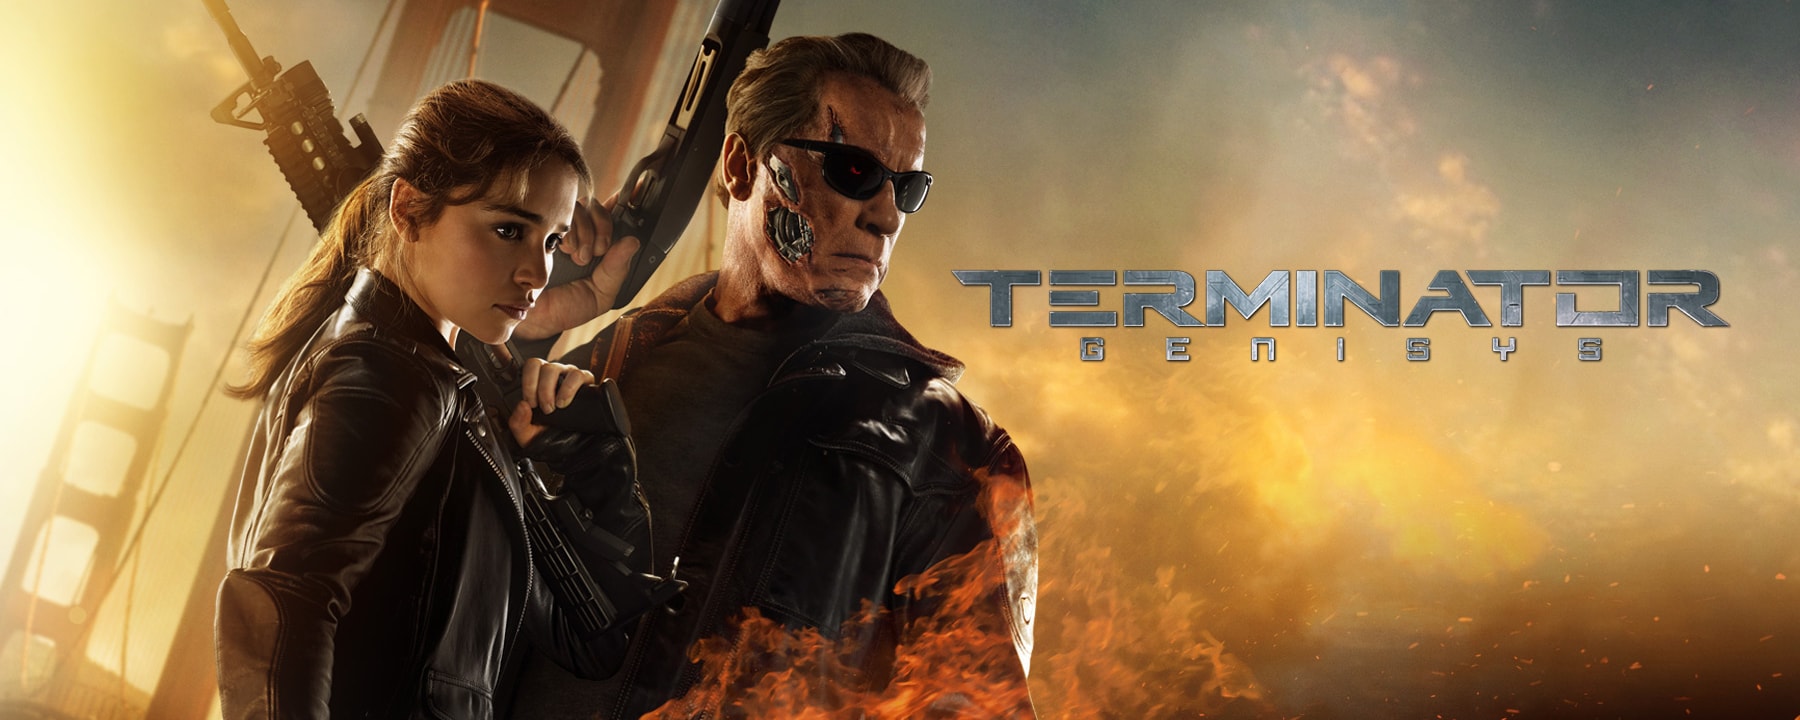 Terminator Genisys 4K 2015 big poster